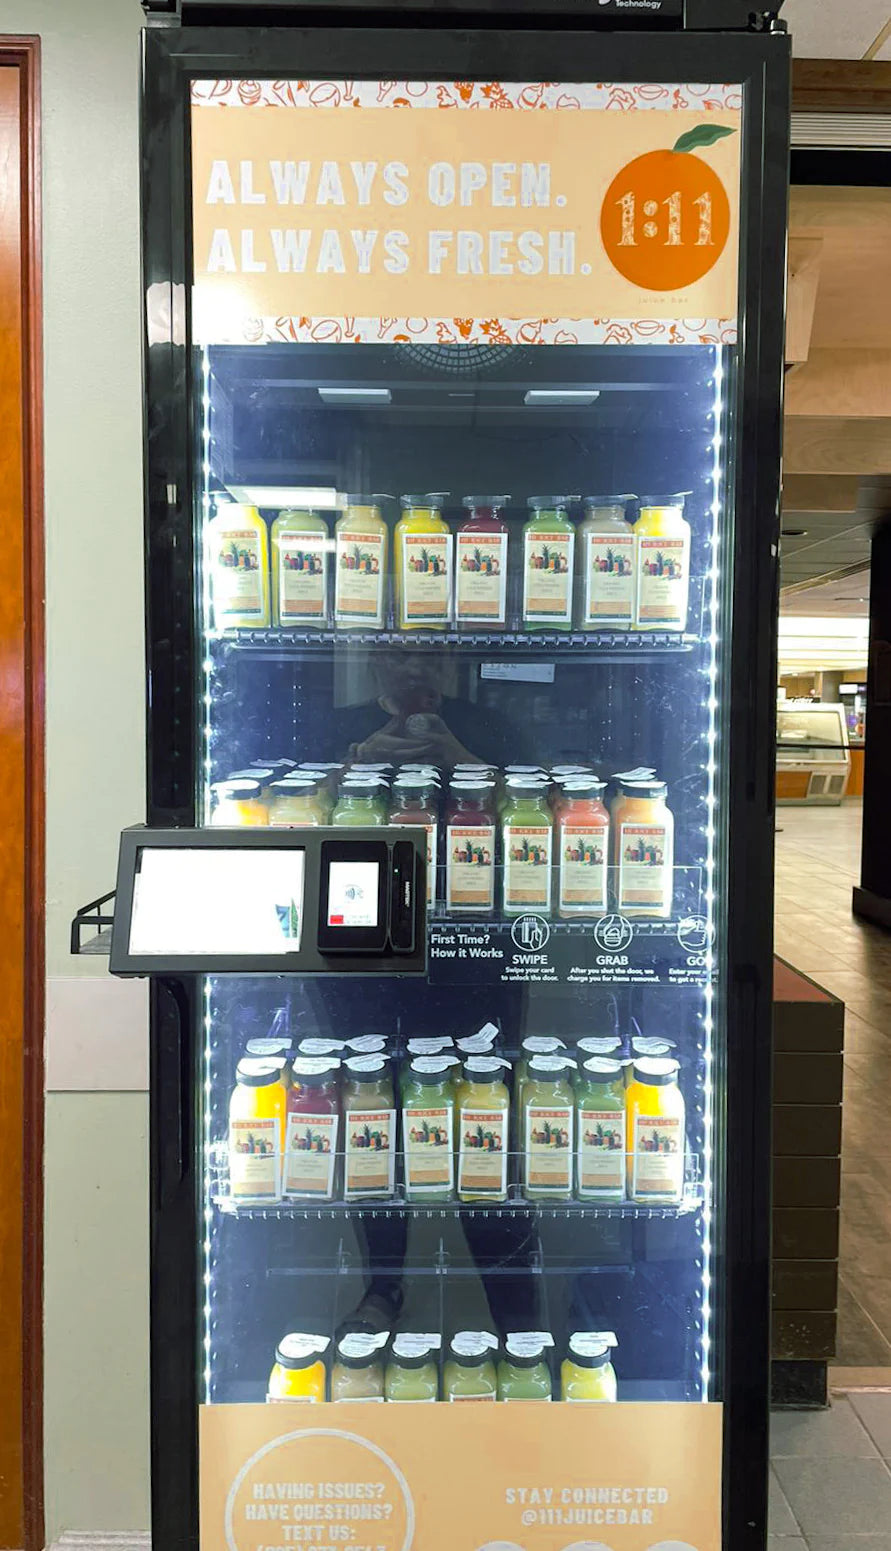 1:11 Juice Bar Launches Smart Refrigerator